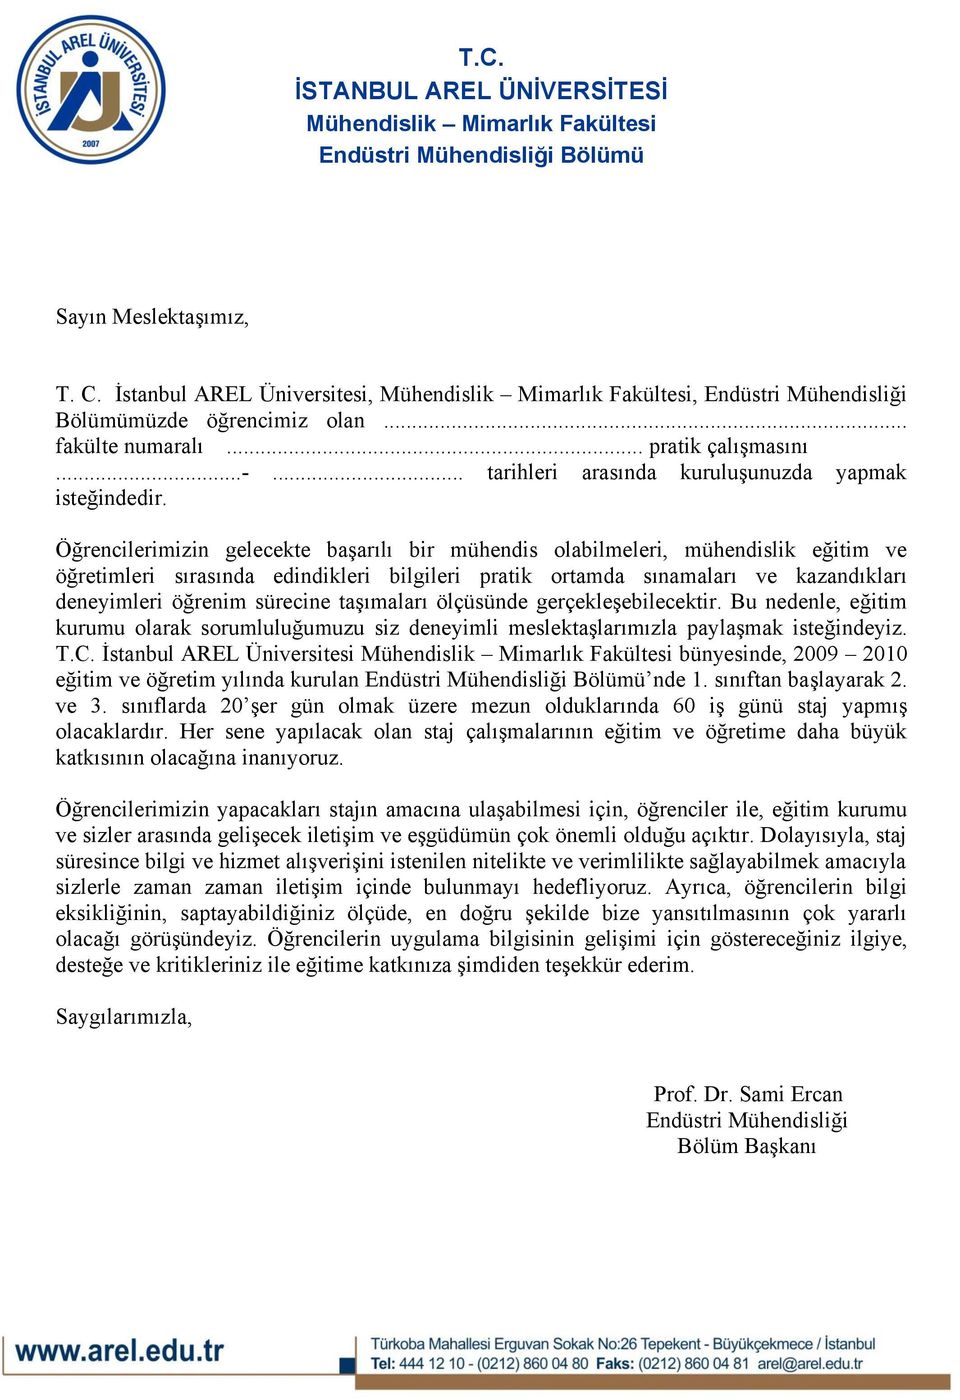 T.C. İSTANBUL AREL ÜNİVERSİTESİ - PDF Ücretsiz indirin